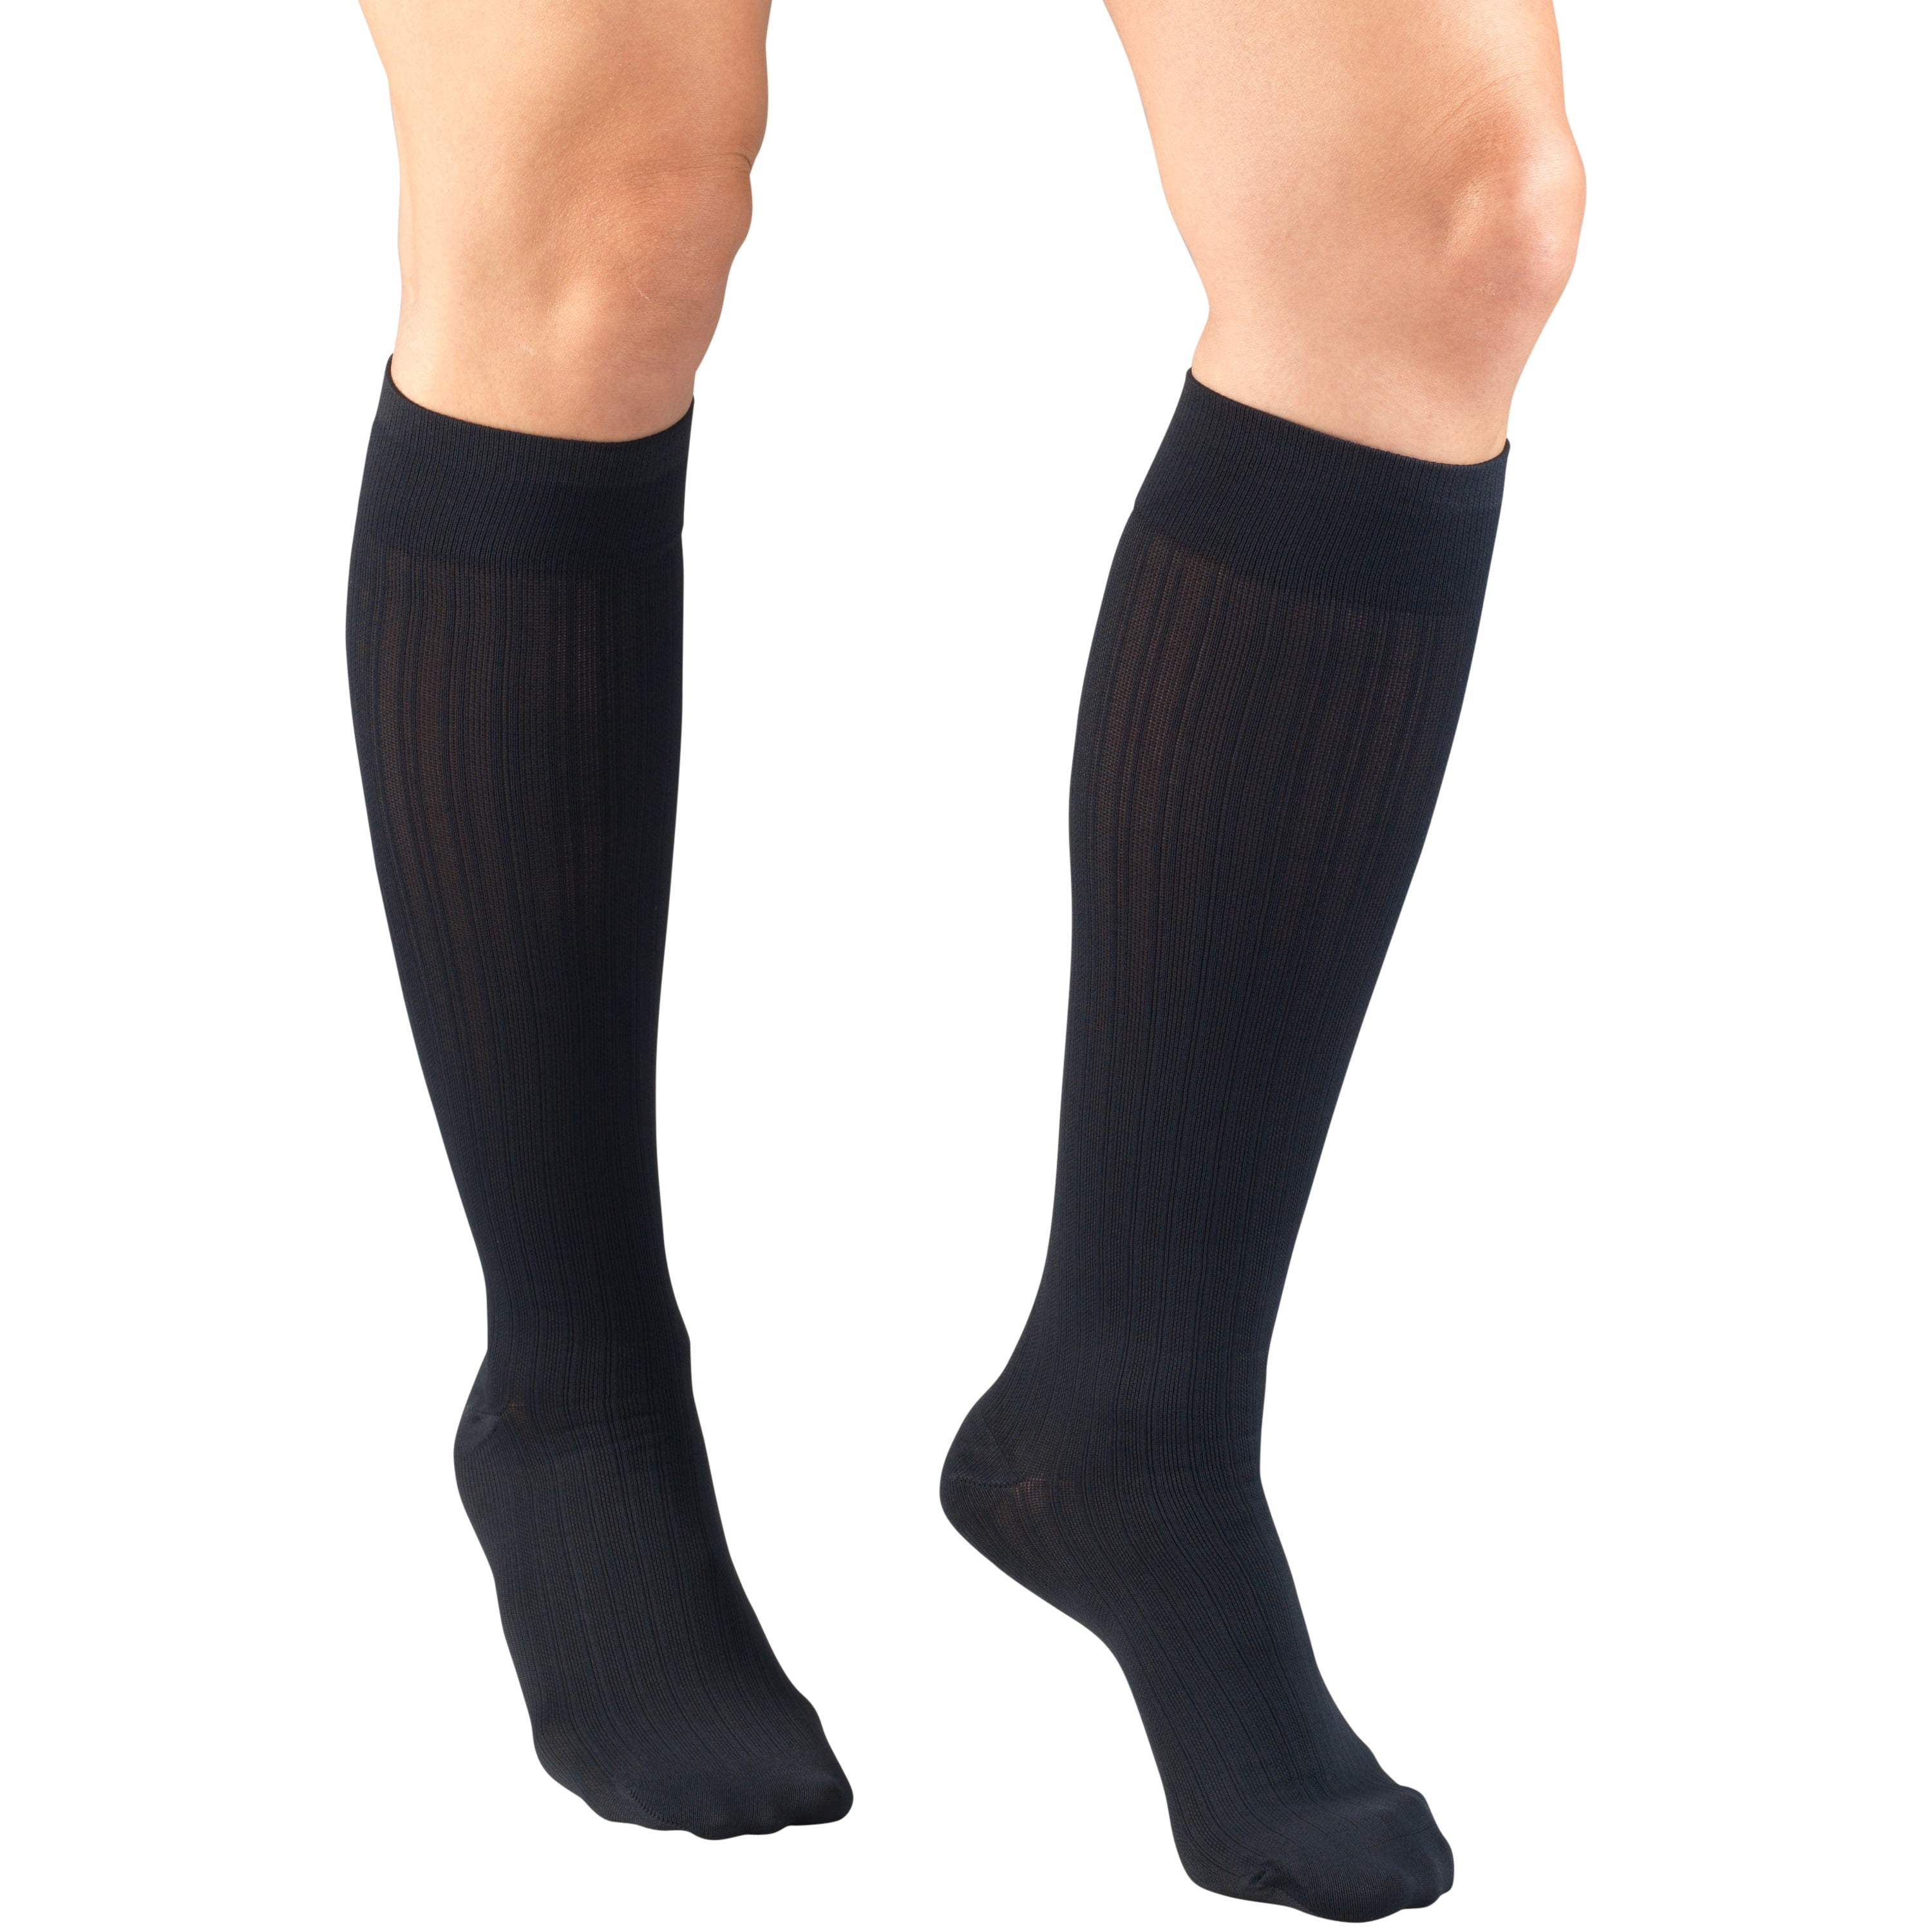 Women's Trouser Socks, Dress Style, Rib Pattern: 15-20 mmHg, Navy, X ...